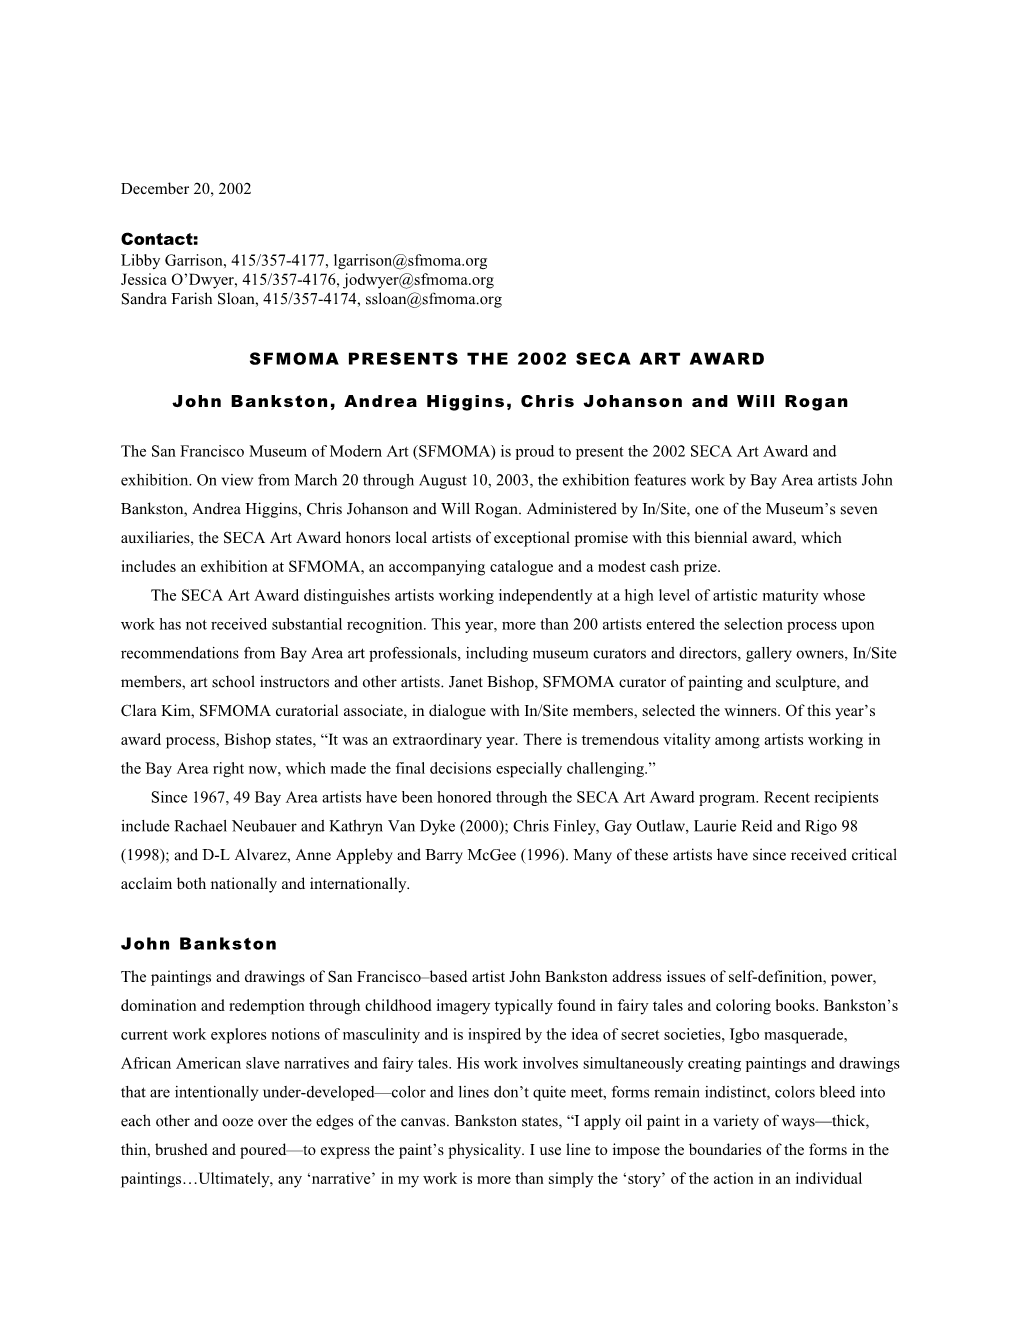 SFMOMA Press Room Press Release: 2002 SECA Art Award